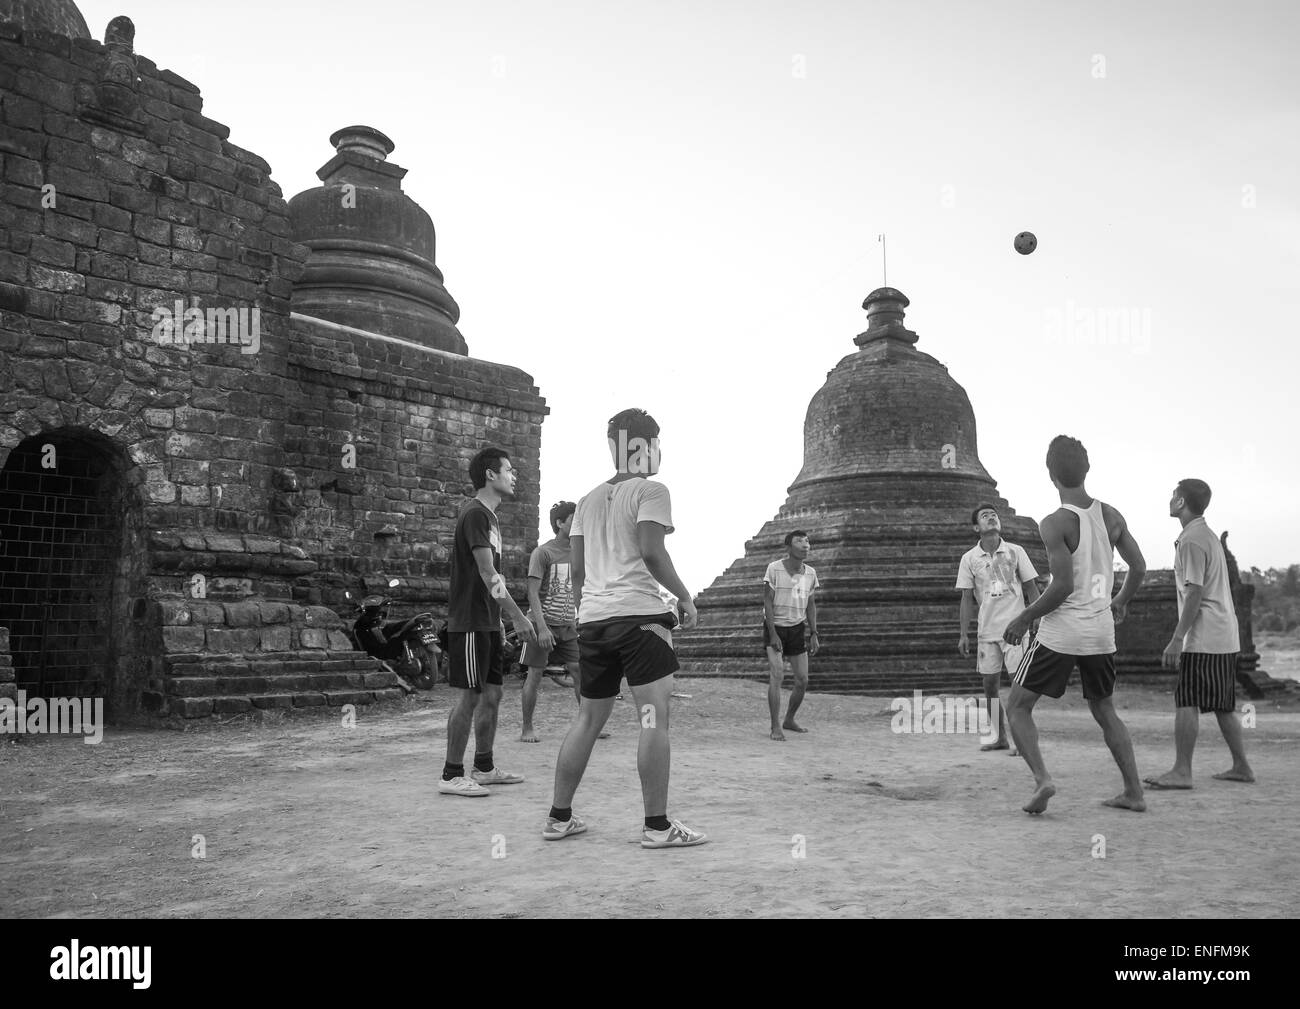 Men Playing Chinlone In Front Of Stupas, Myanmar Stock Photo